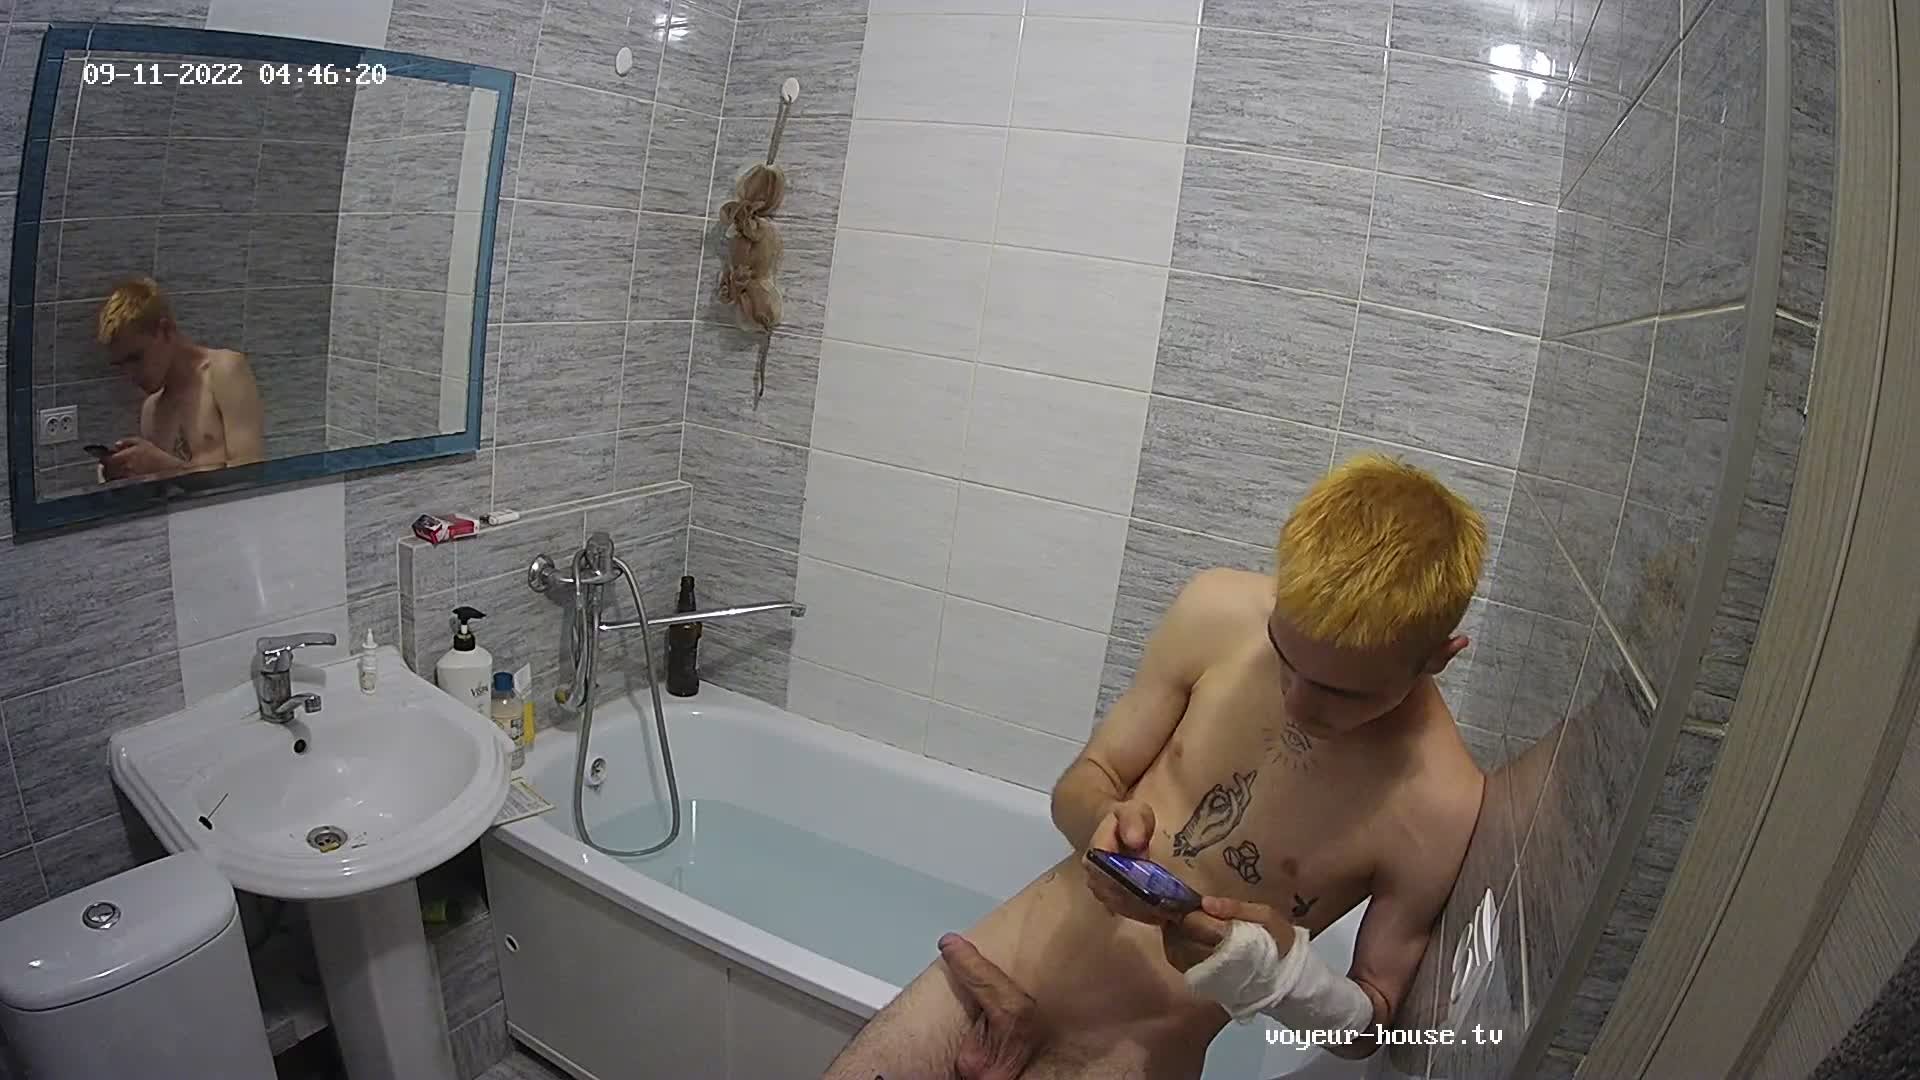 Artem jerking off in the bathroom 11 Sep 2022